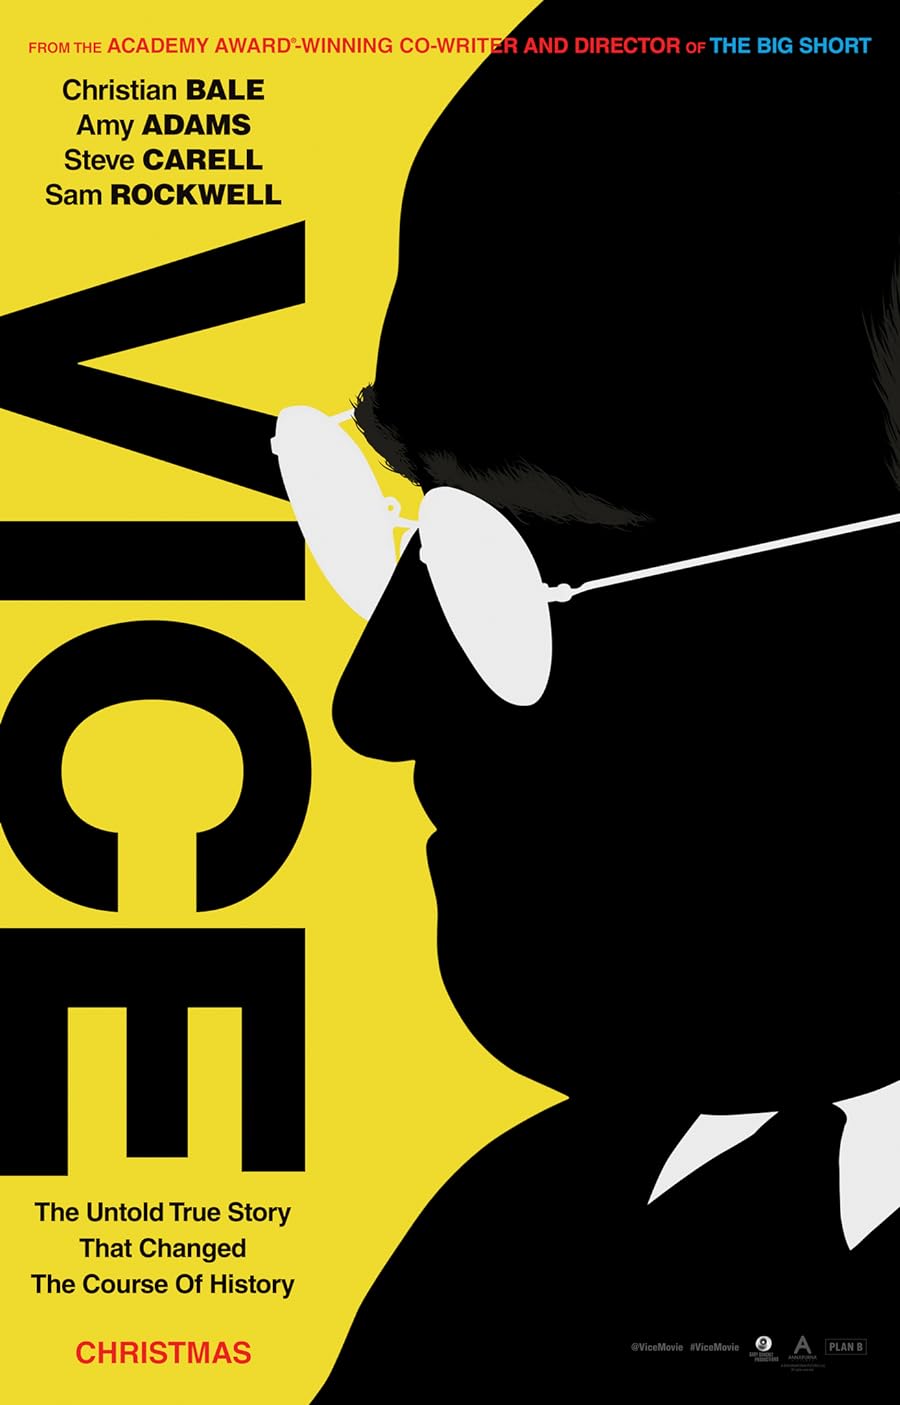 دانلود فیلم Vice 2018 دوبله فارسی بدون حذفیات | Downloading or Watching Vice 2018 Full Movie Streamings Online for Free